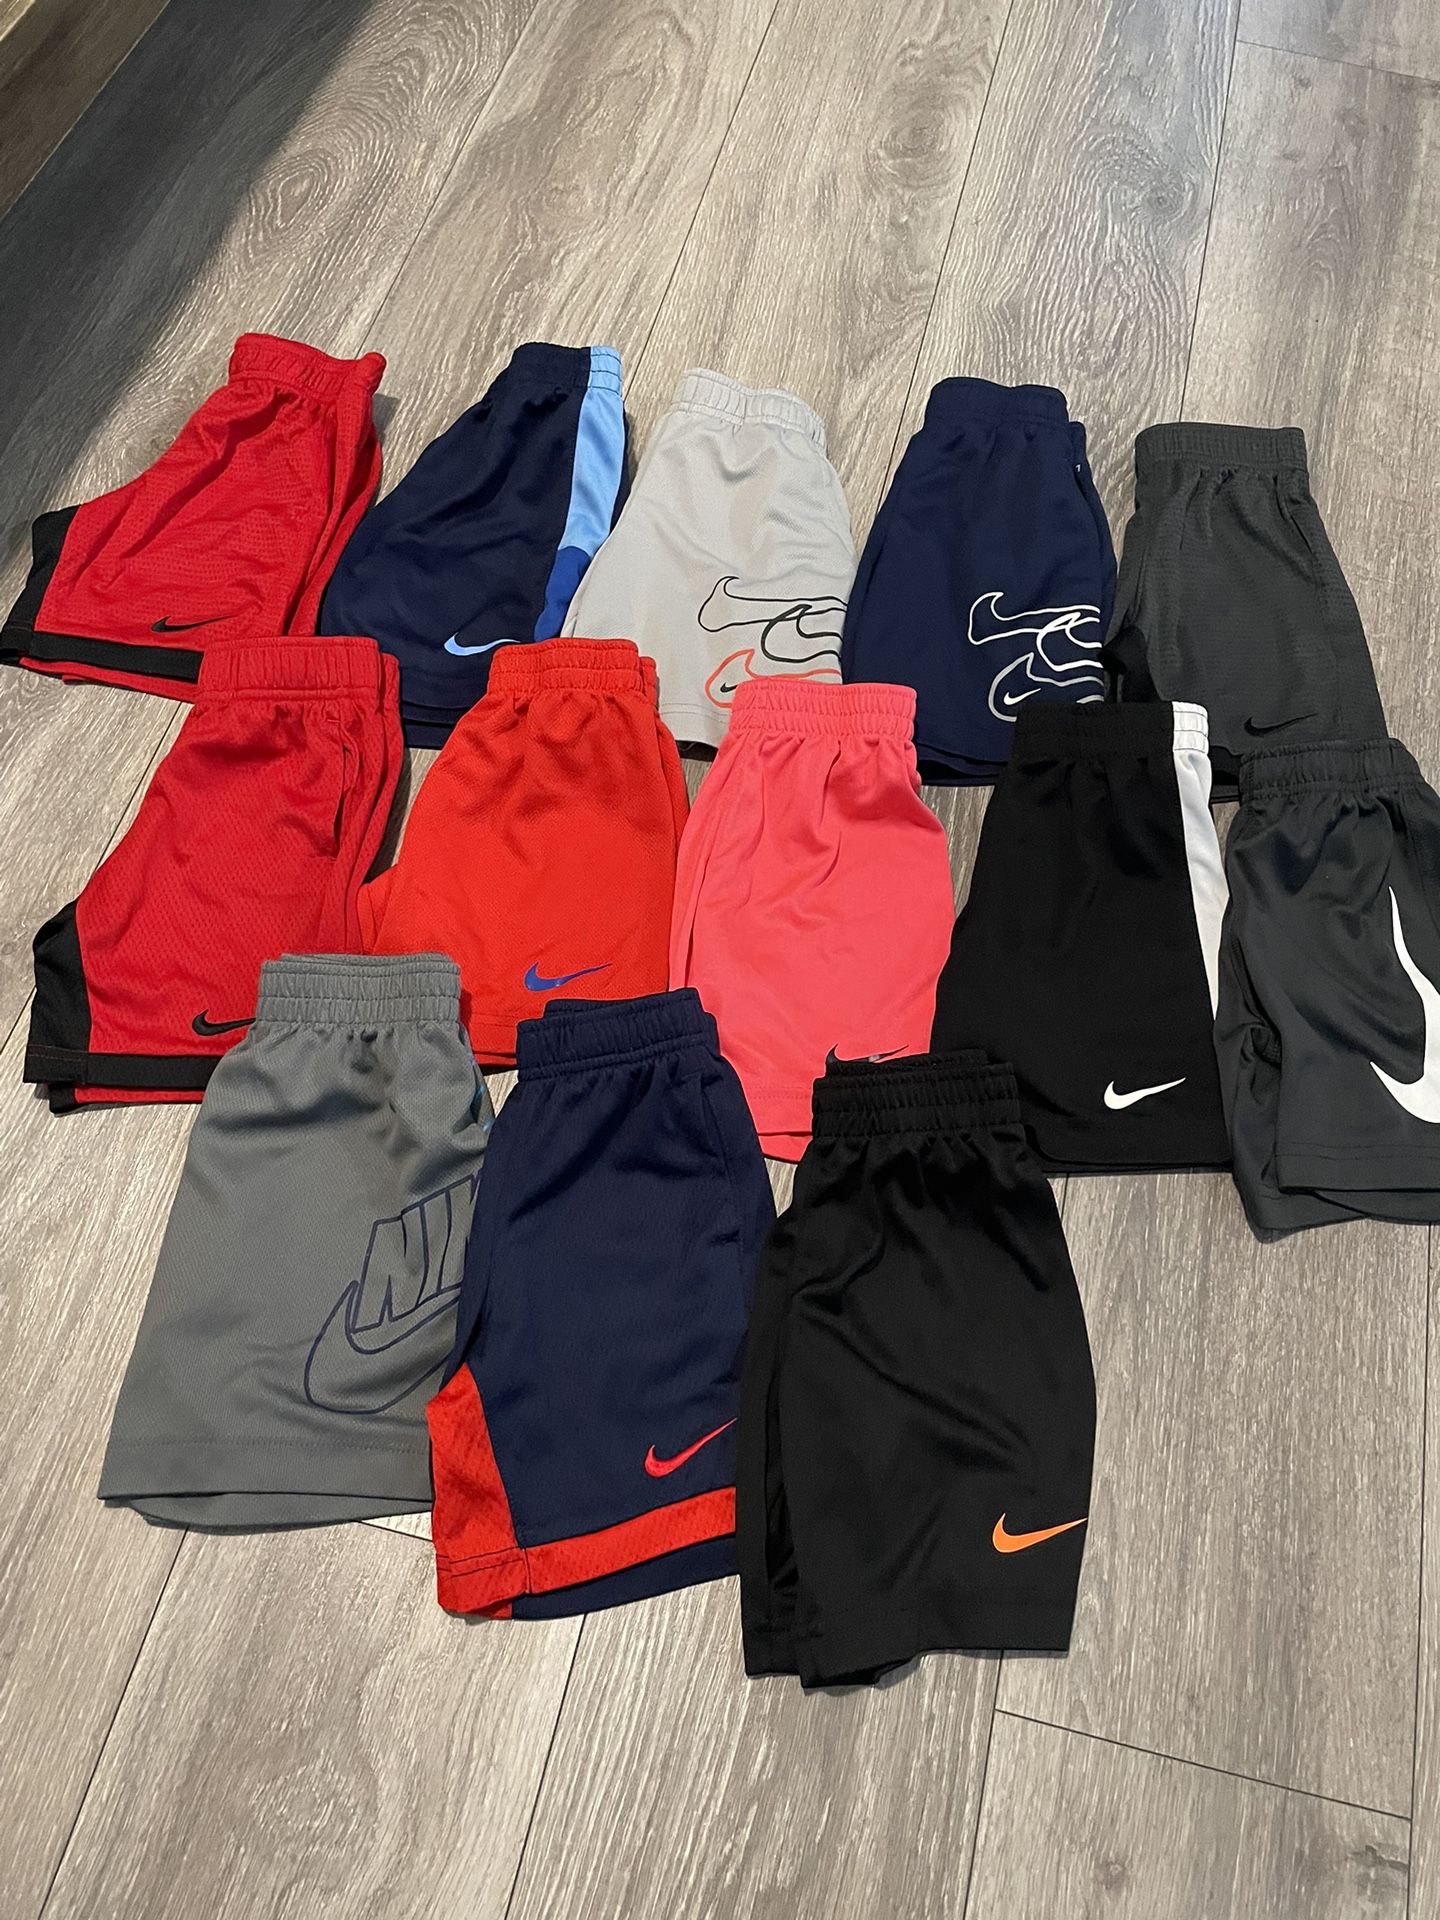 Boys Nike clothing  4T